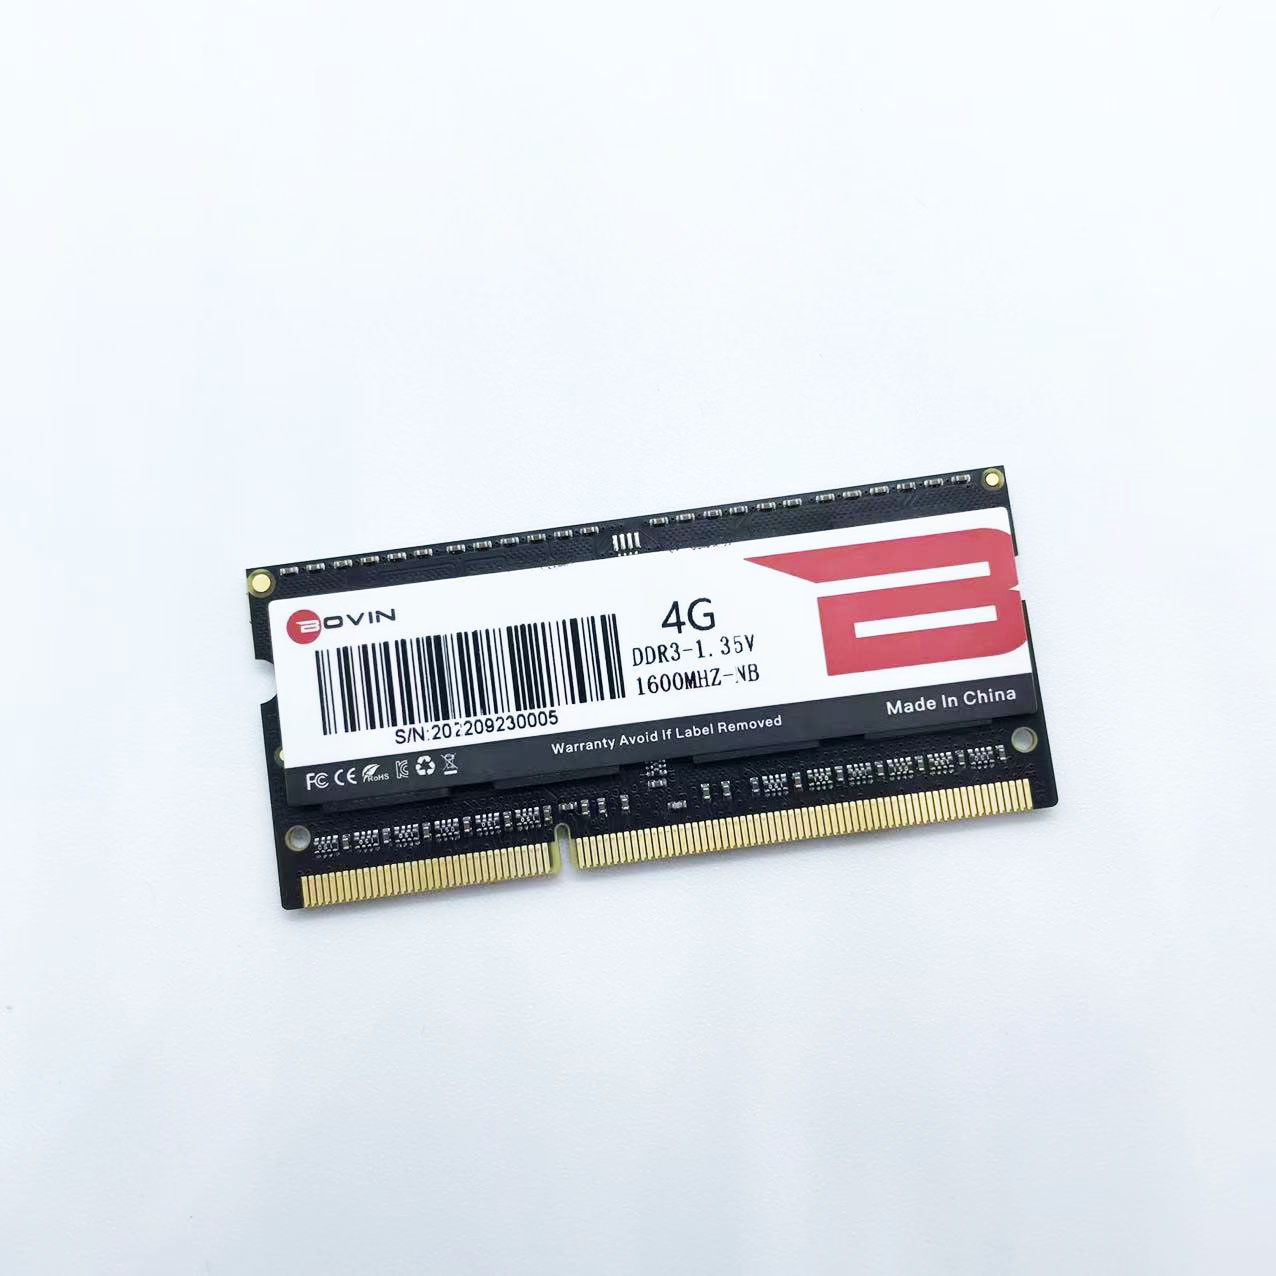 BOVIN Brand Laptop RAM 4G DDR3 1.35V 1600MHZ-NB 